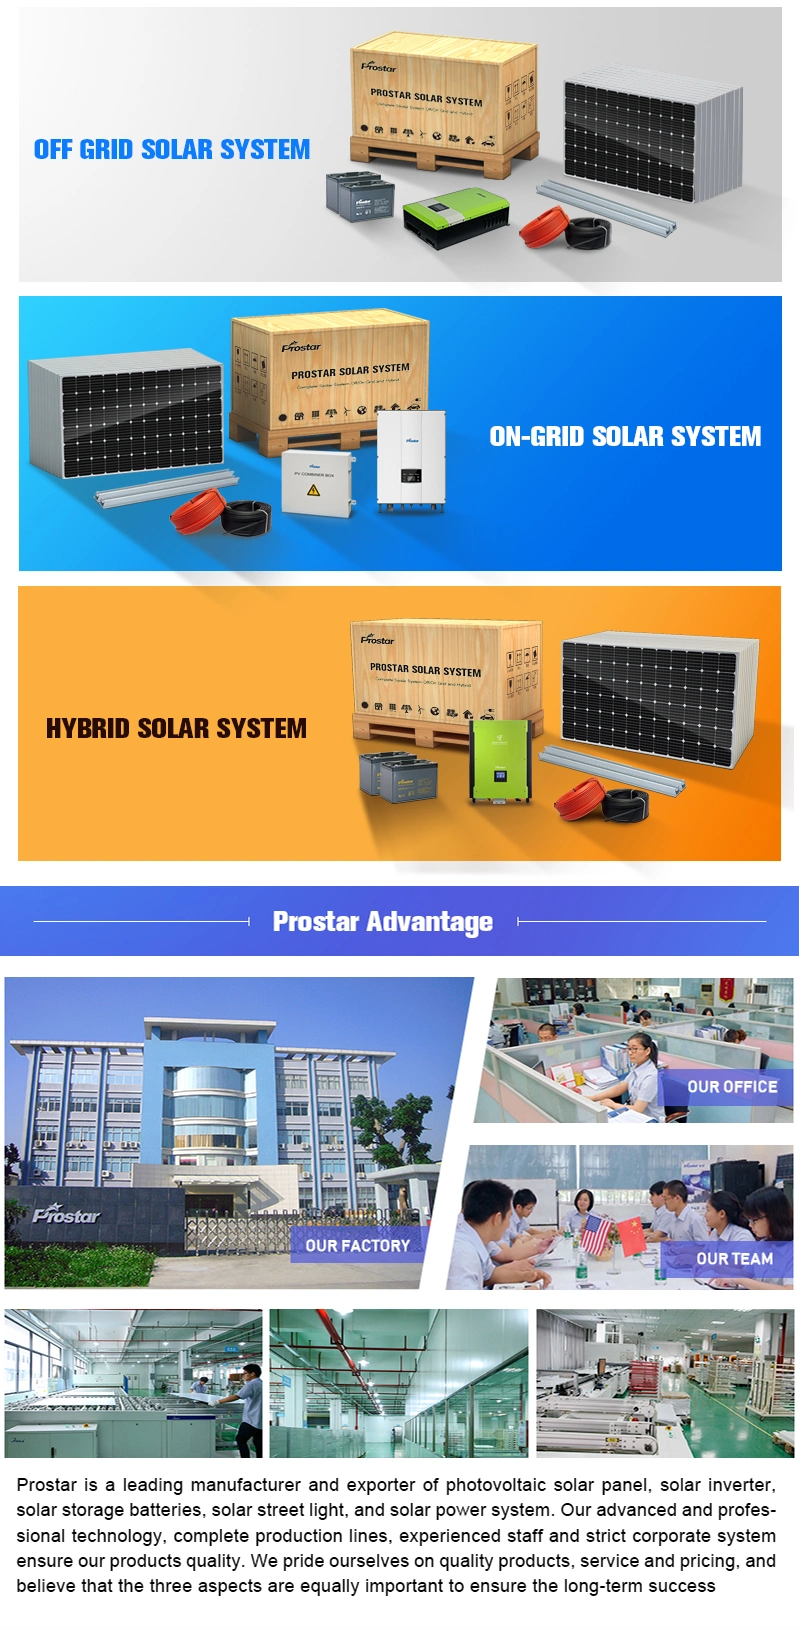 350W Mono Solar Module 350 Wp High Efficiency PV Modules Solar Panel Cell Price